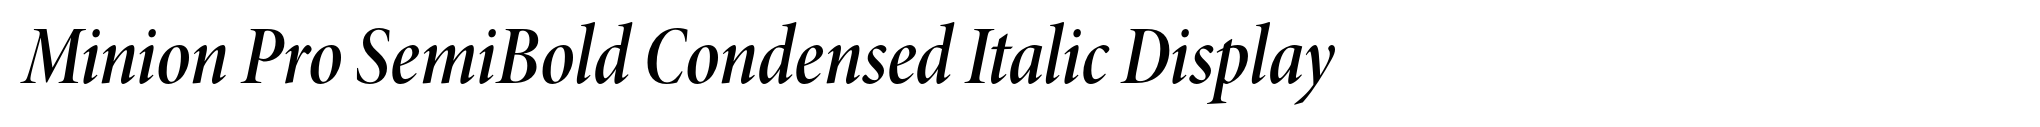 Minion Pro SemiBold Condensed Italic Display image